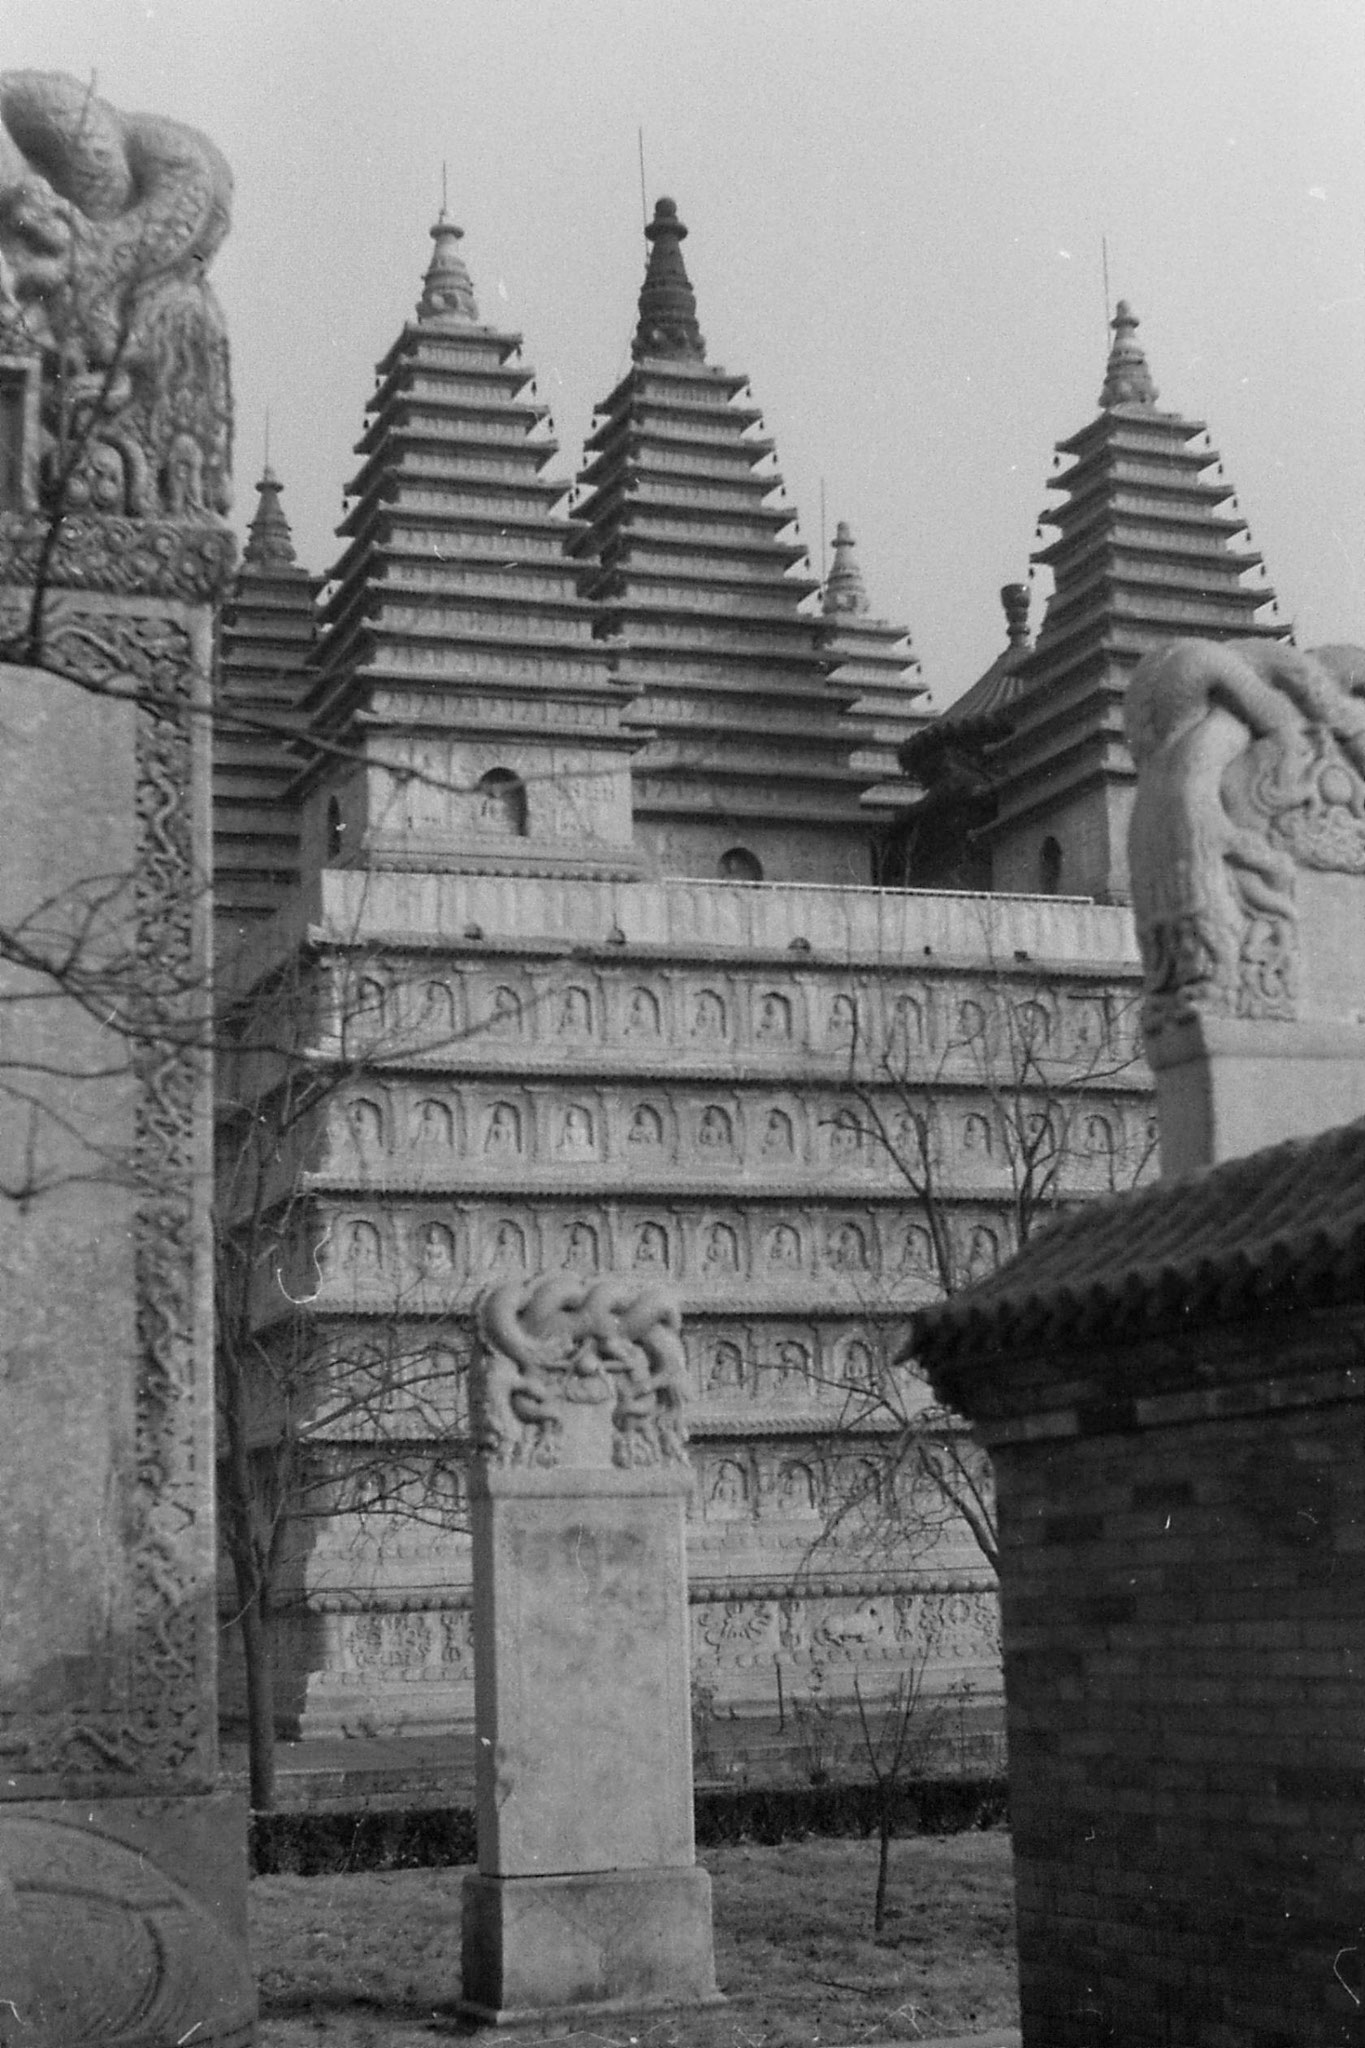 29/11/1988: Wutasi - Five Pagoda Temple